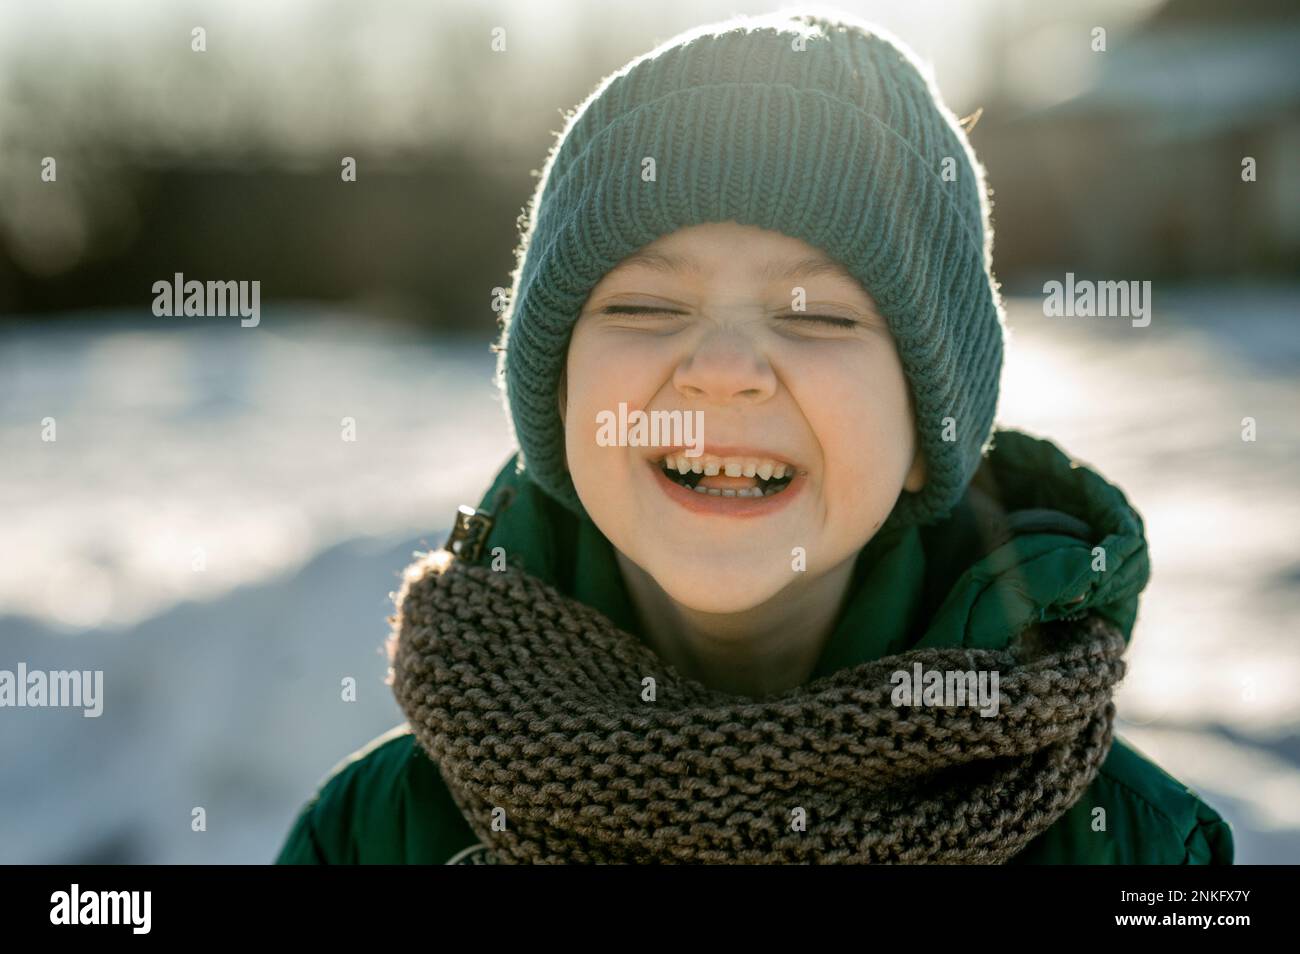 Cheerful boy wearing knit hat in winter Stock Photo